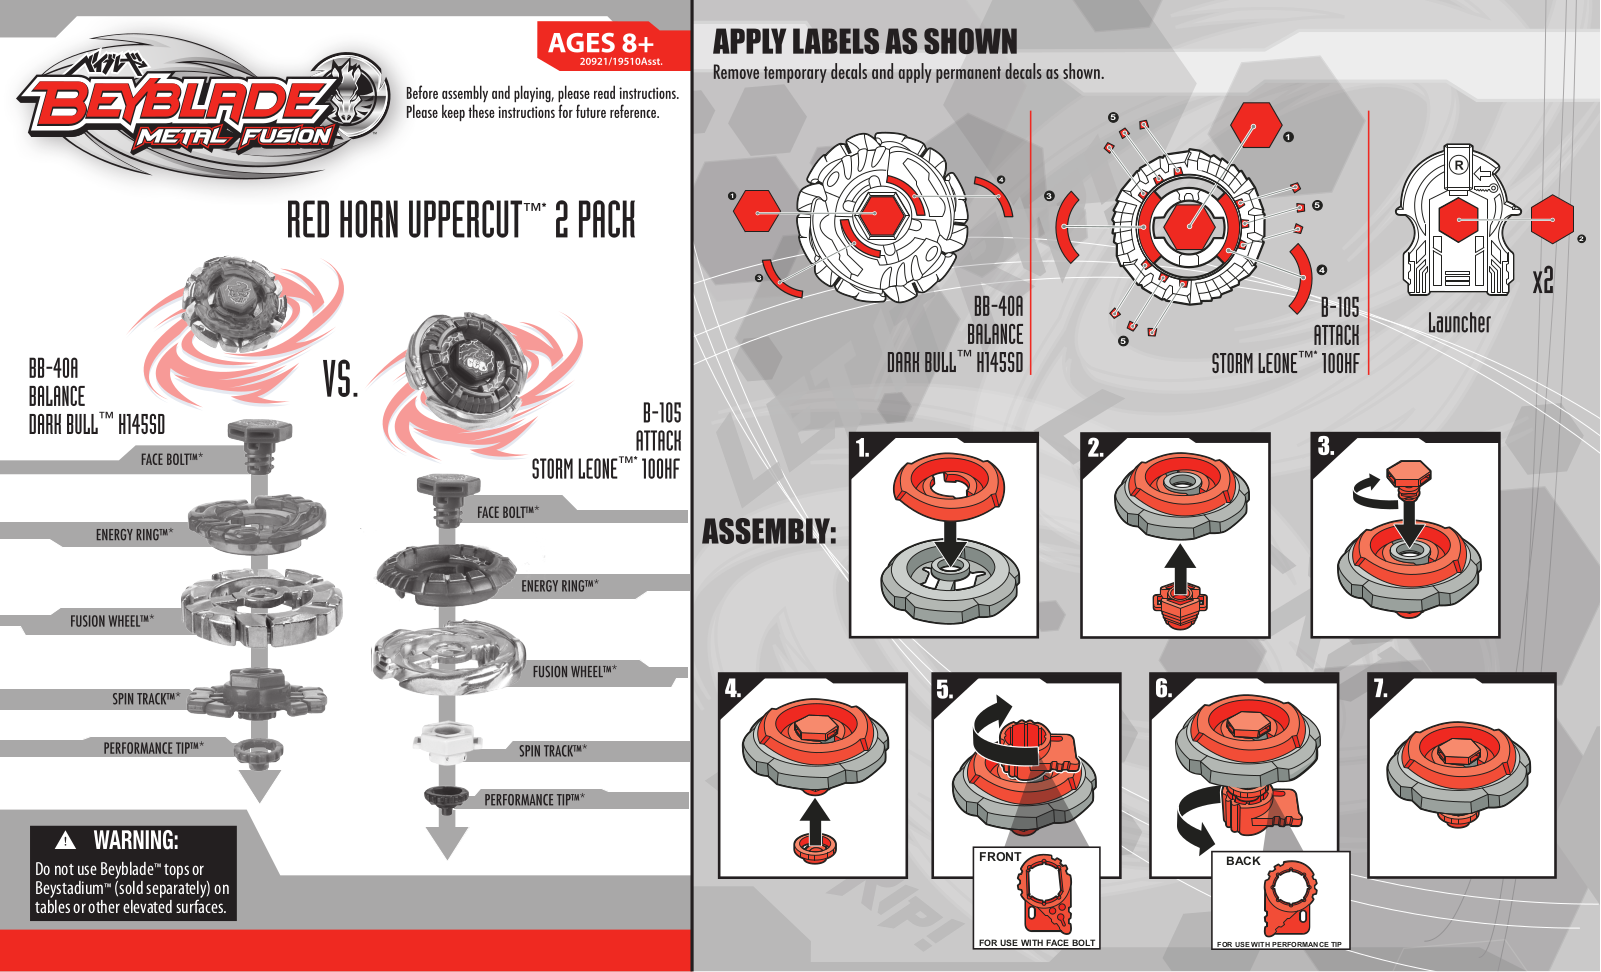 HASBRO Beyblade Metal Fusion Balance Dark Bull Vs Attack, Beyblade Metal Fusion Red Horn Uppercut 2-Pk User Manual